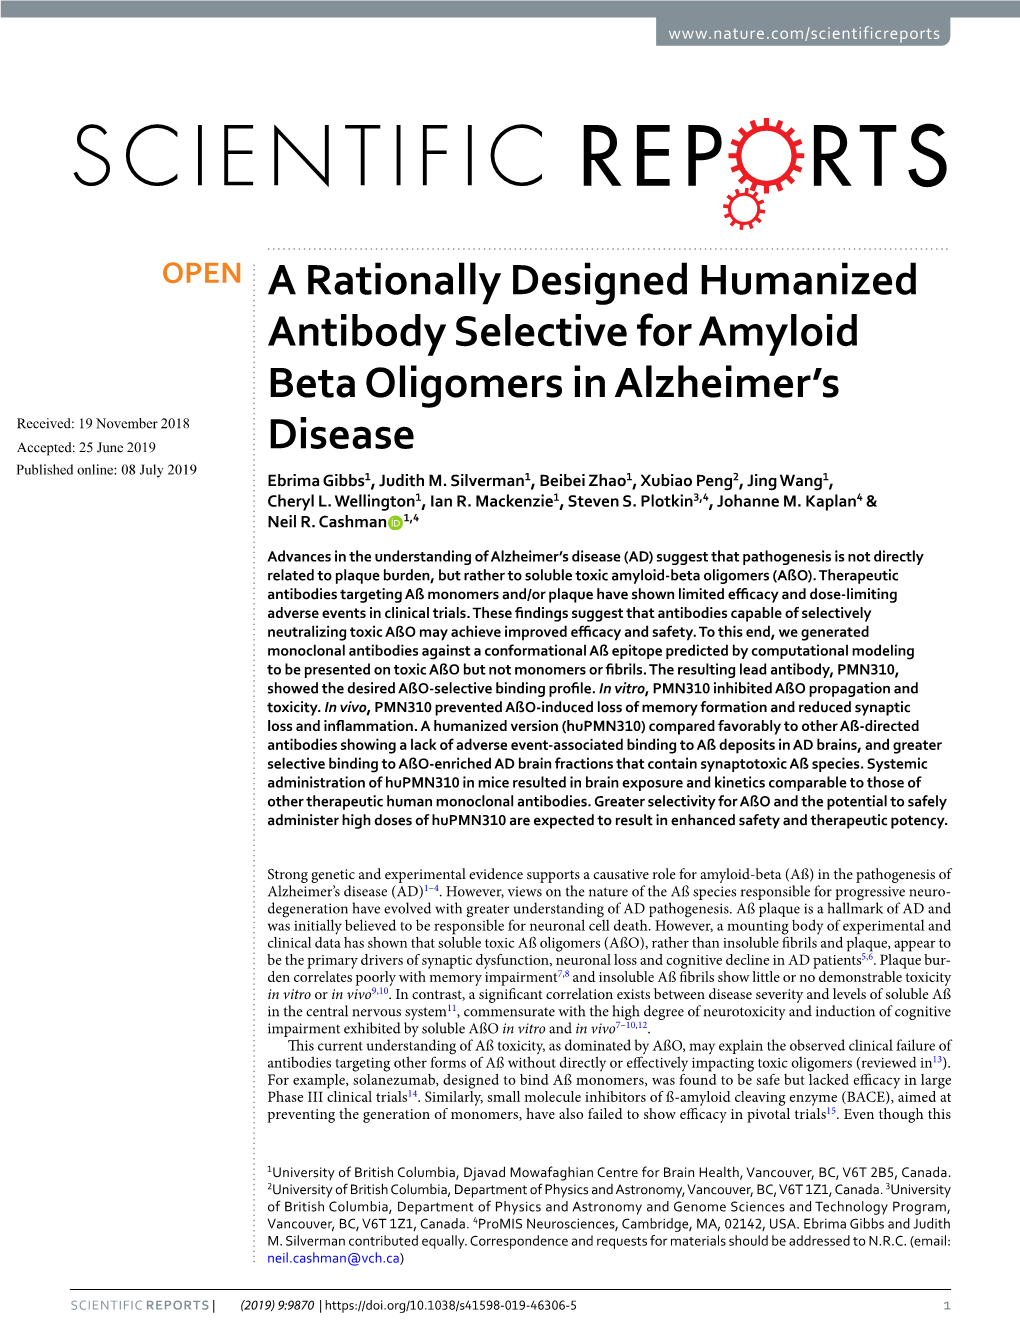 A Rationally Designed Humanized Antibody Selective for Amyloid Beta